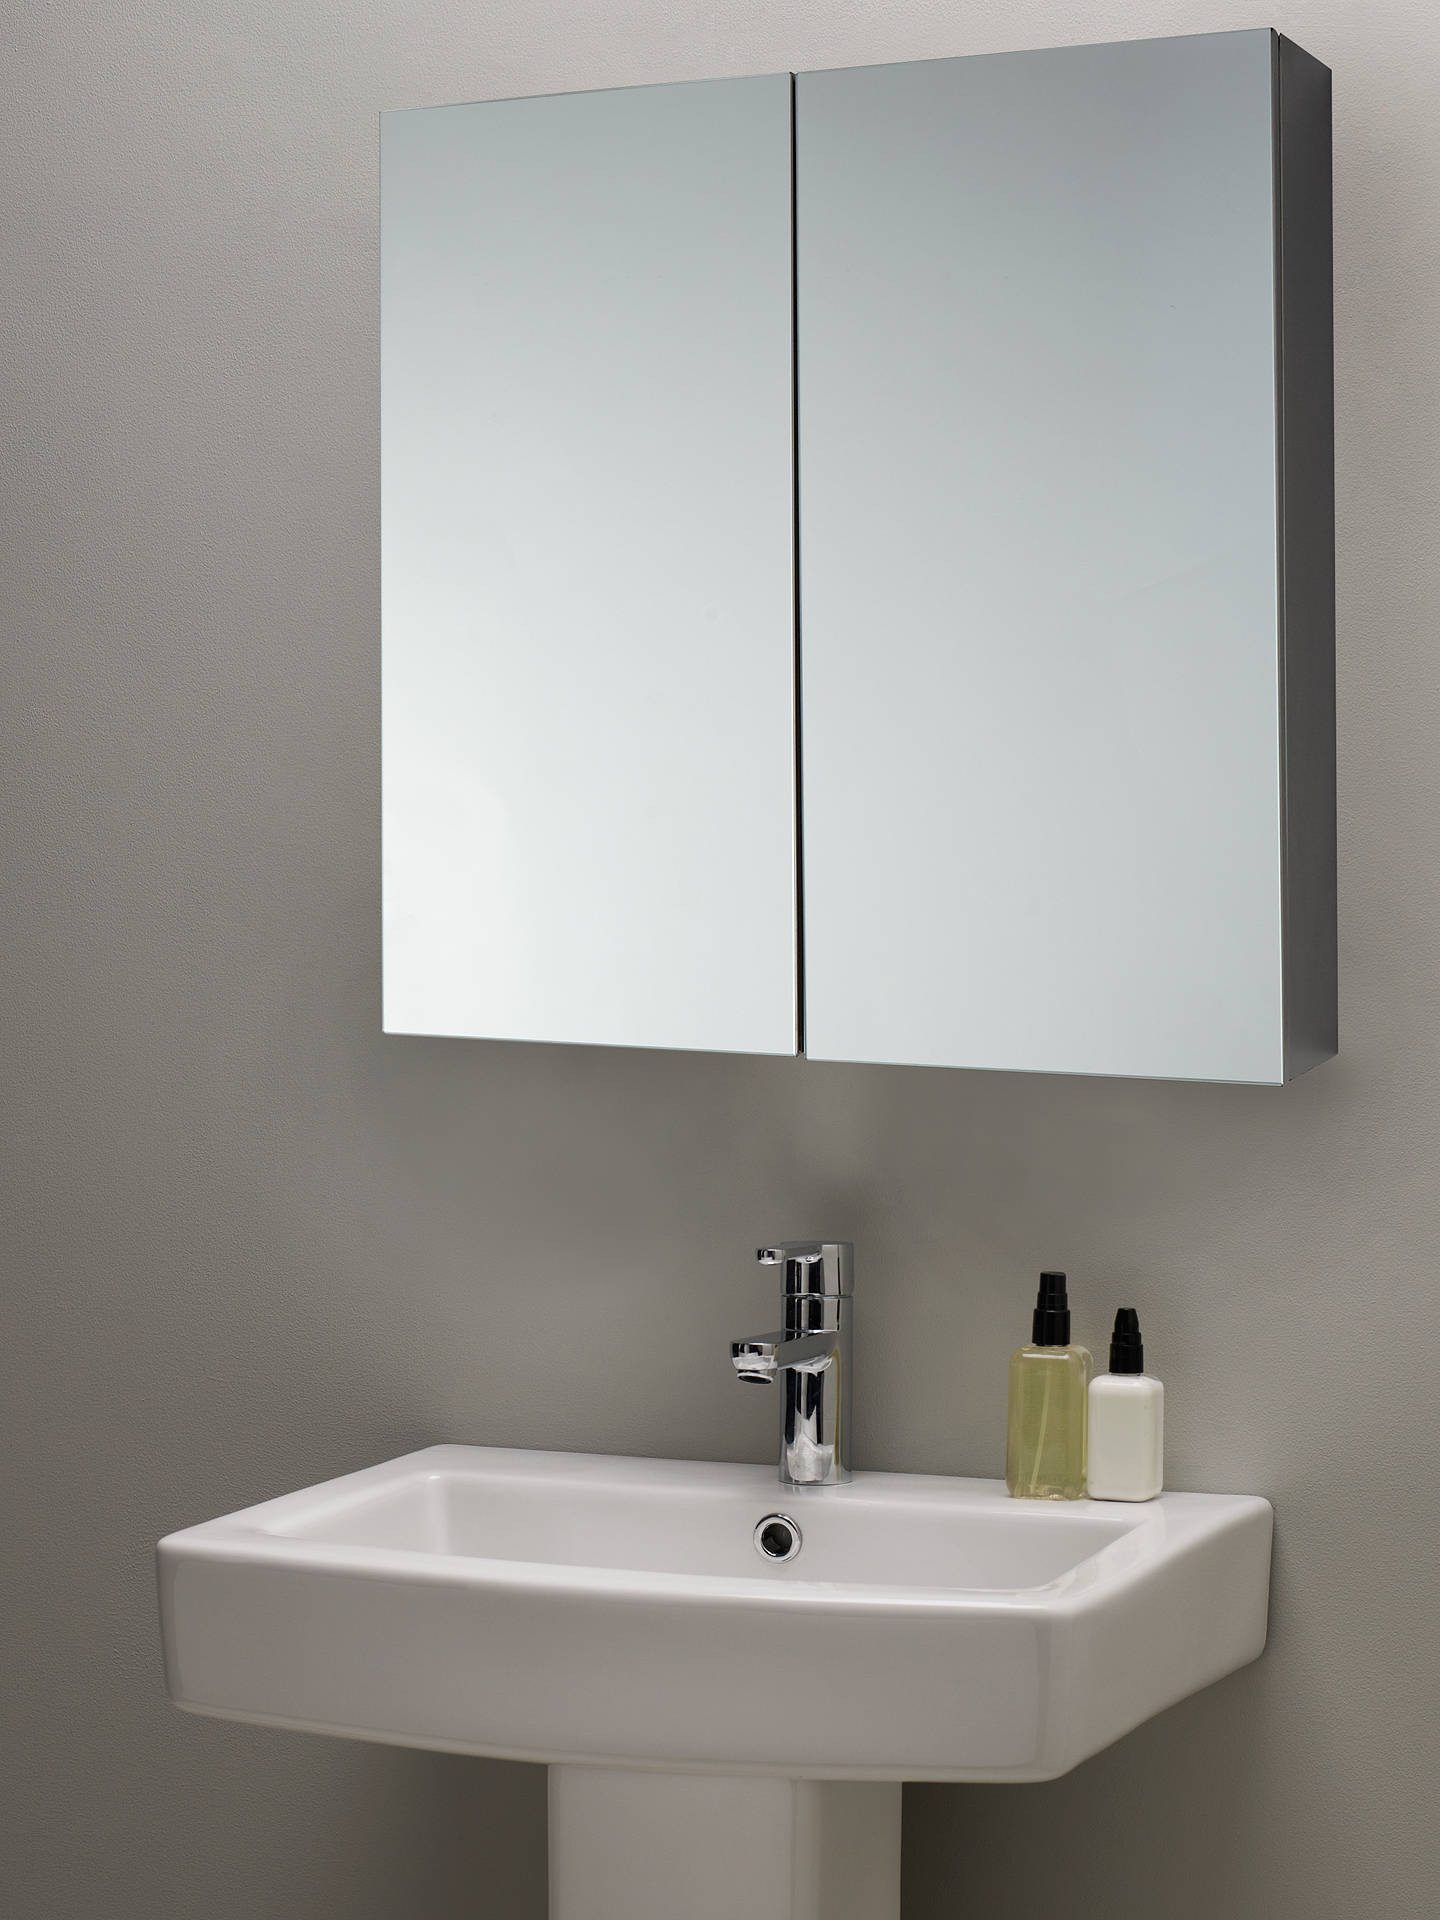 Mirrored Bathroom Cabinets
 John Lewis & Partners Double Mirrored Bathroom Cabinet